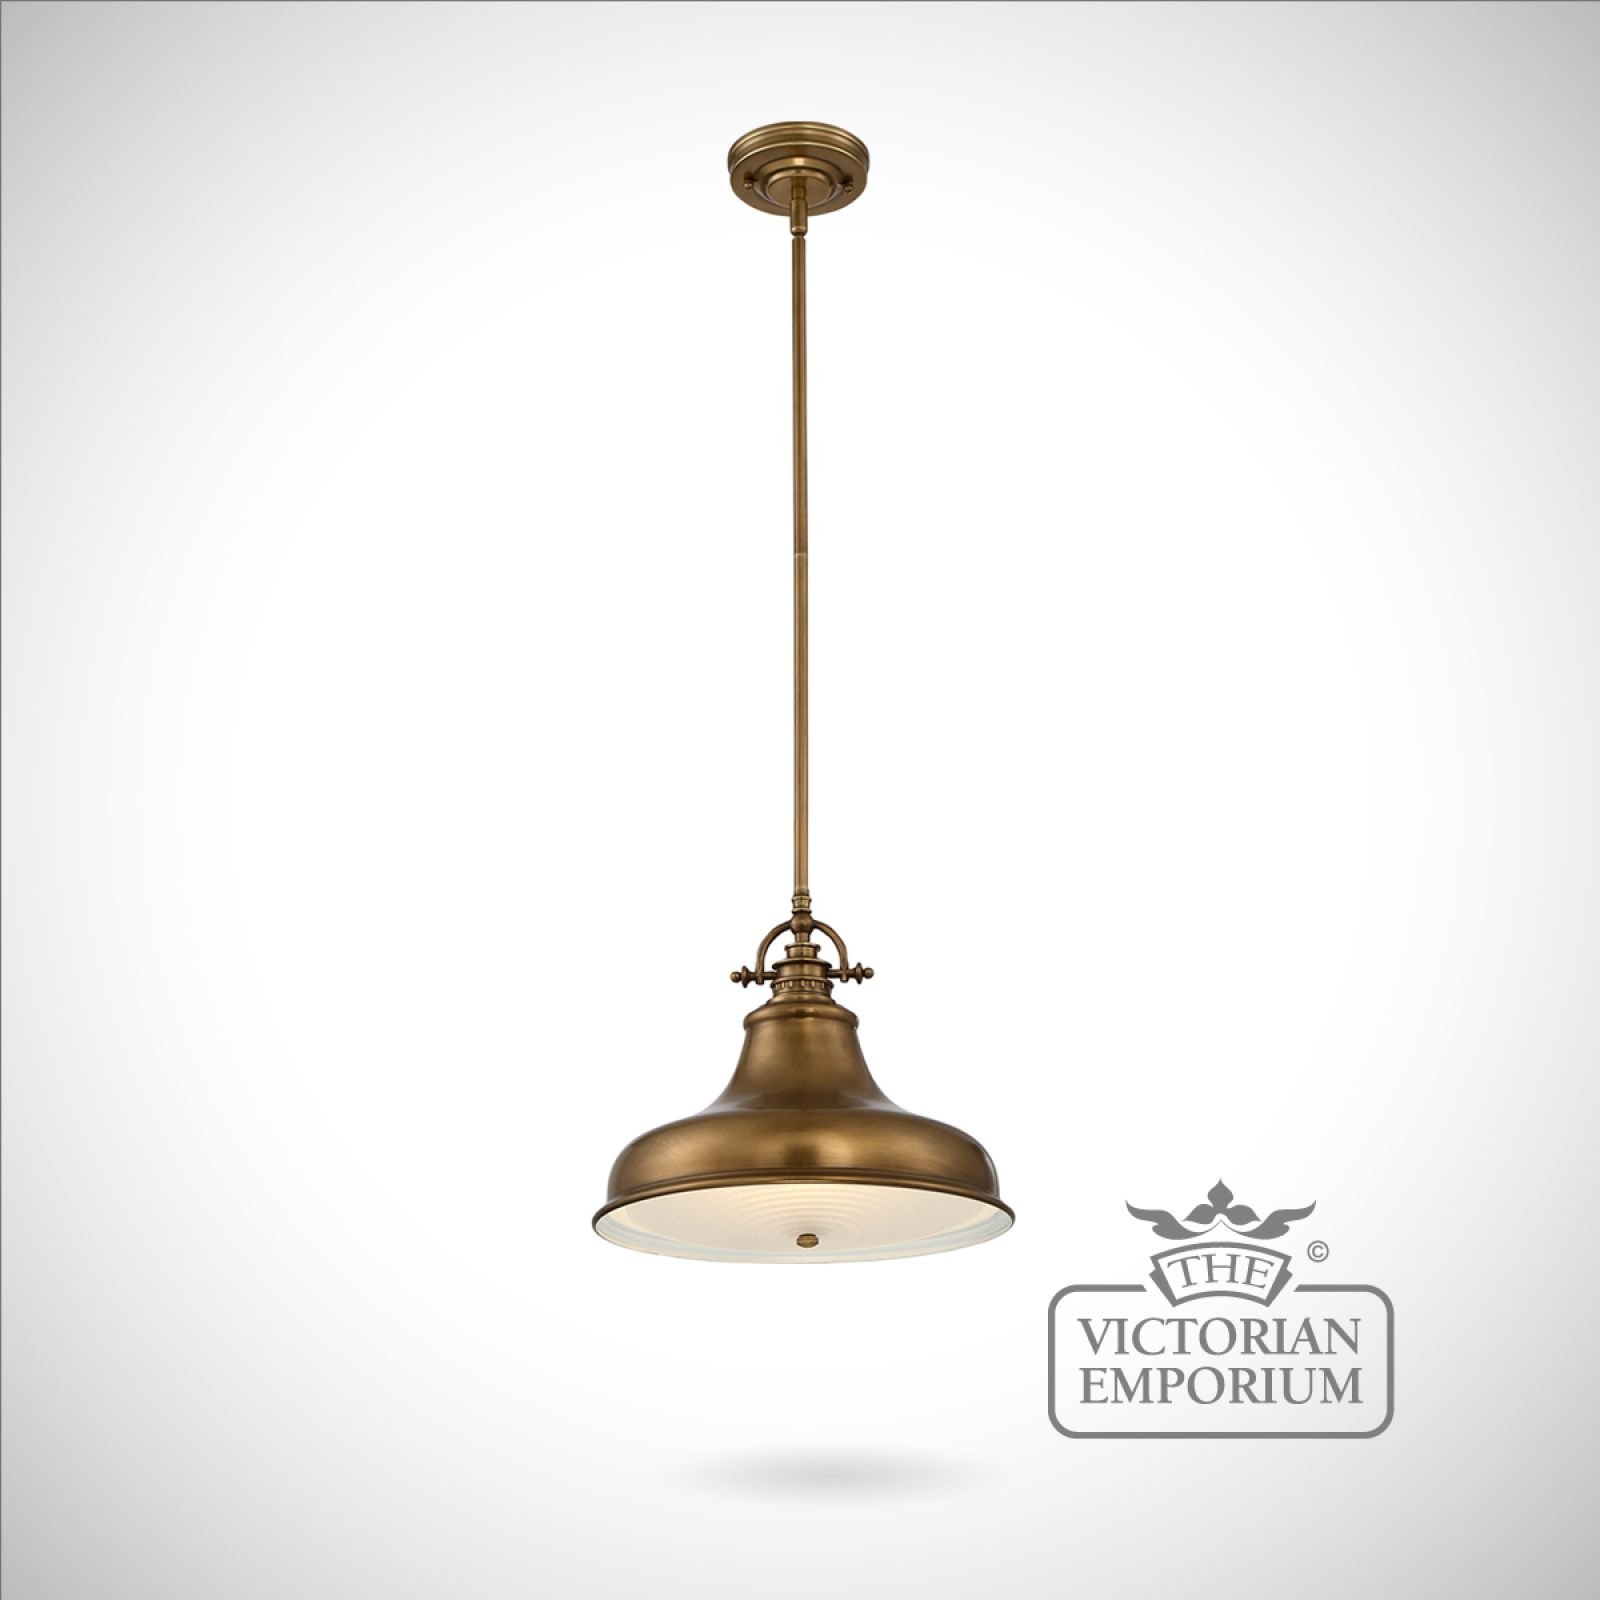 Emerey single medium pendant light in Weathered Brass